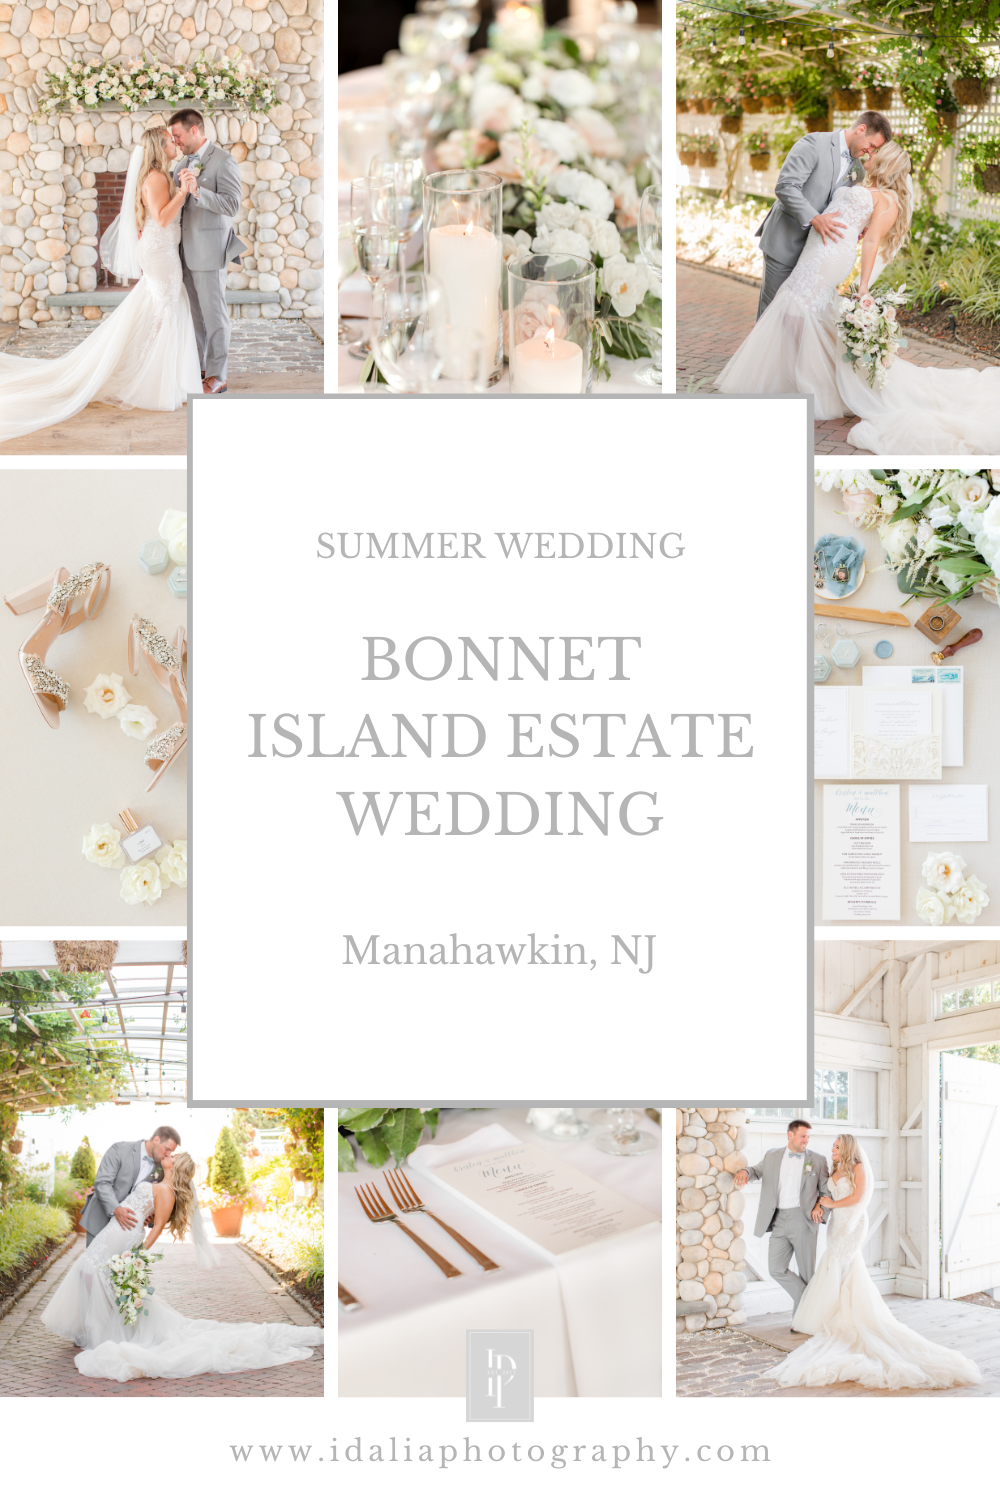 Bonnet Island Estate wedding in Manahawkin NJ